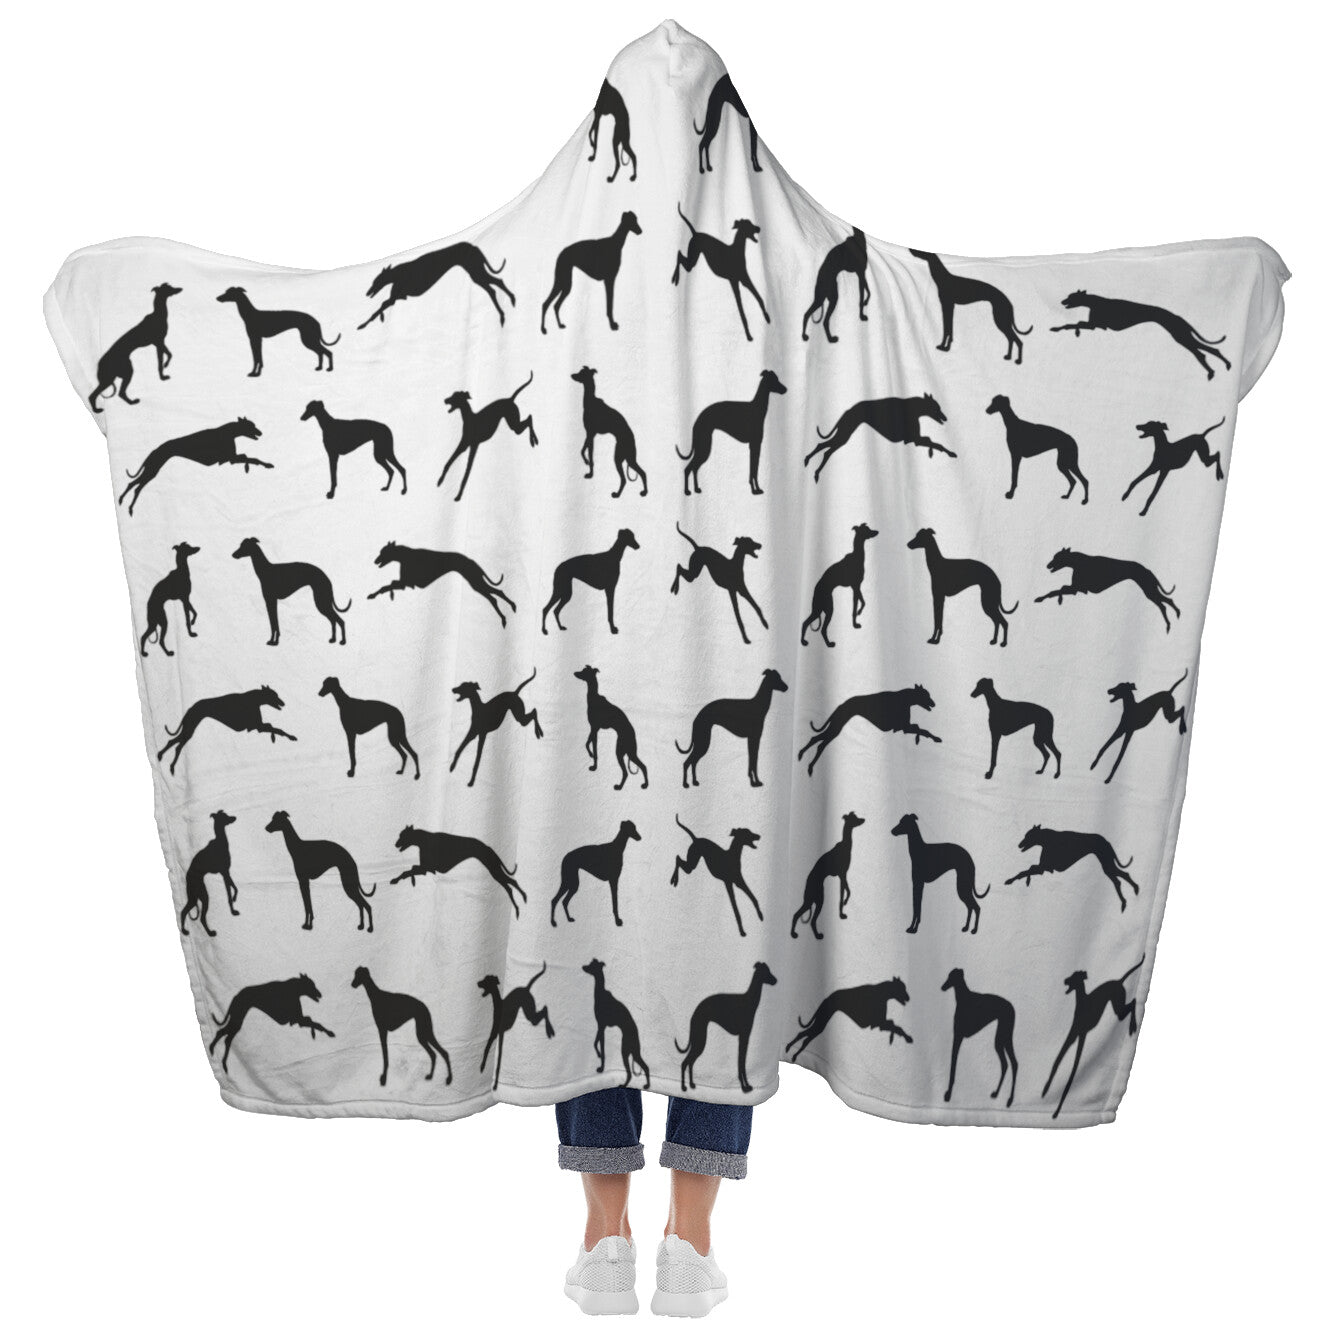 Hooded Greyhound Silhouette Blanket